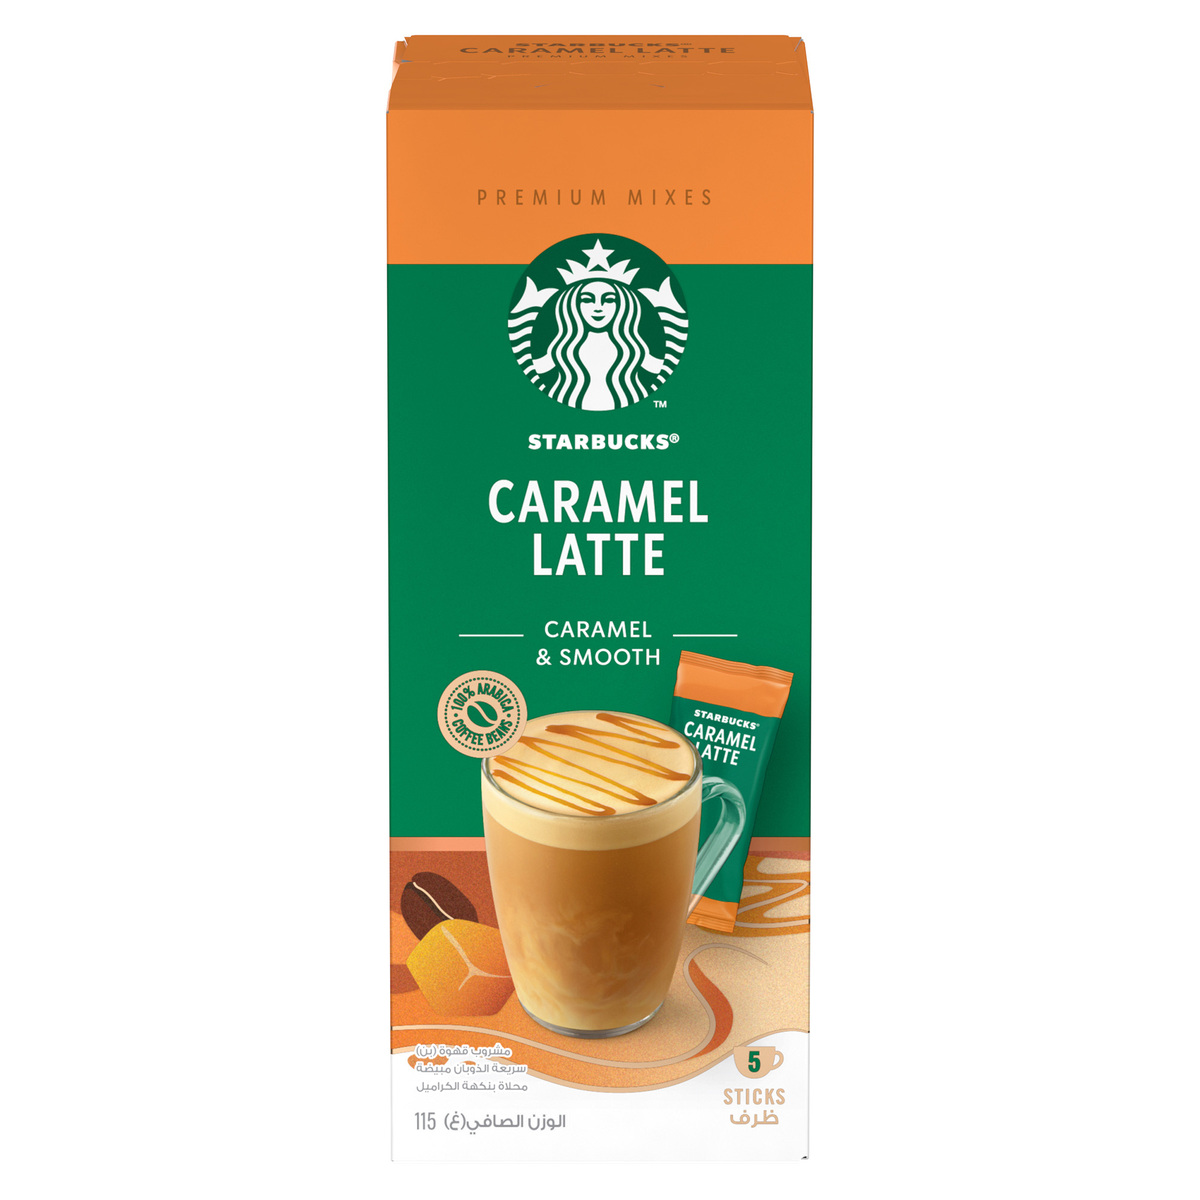 Starbucks Caramel Latte Caramel & Smooth Premium Instant Coffee Mix 23 g